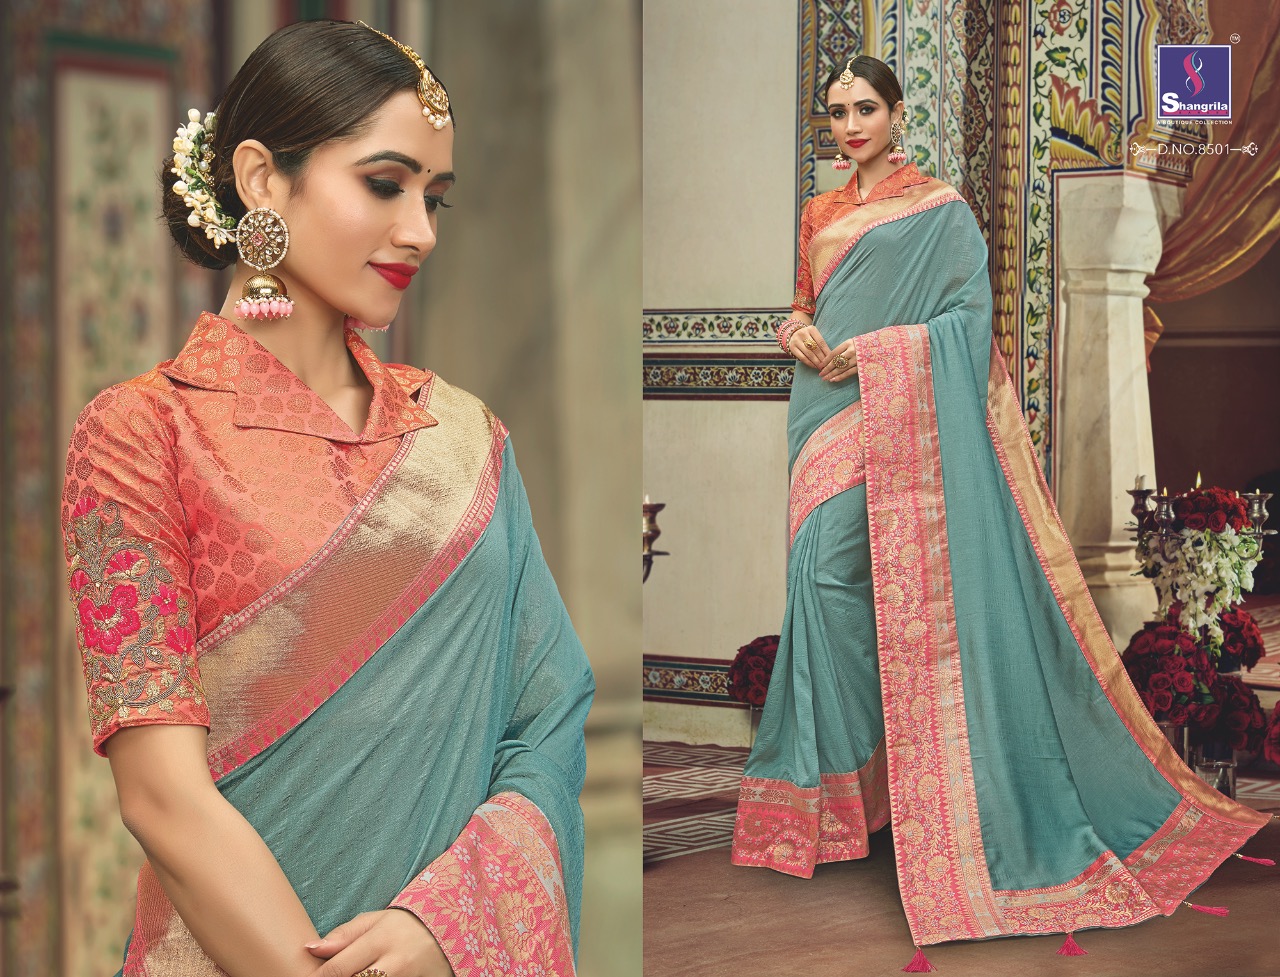 shangrila manyavar silk designer wear silk sarees collection